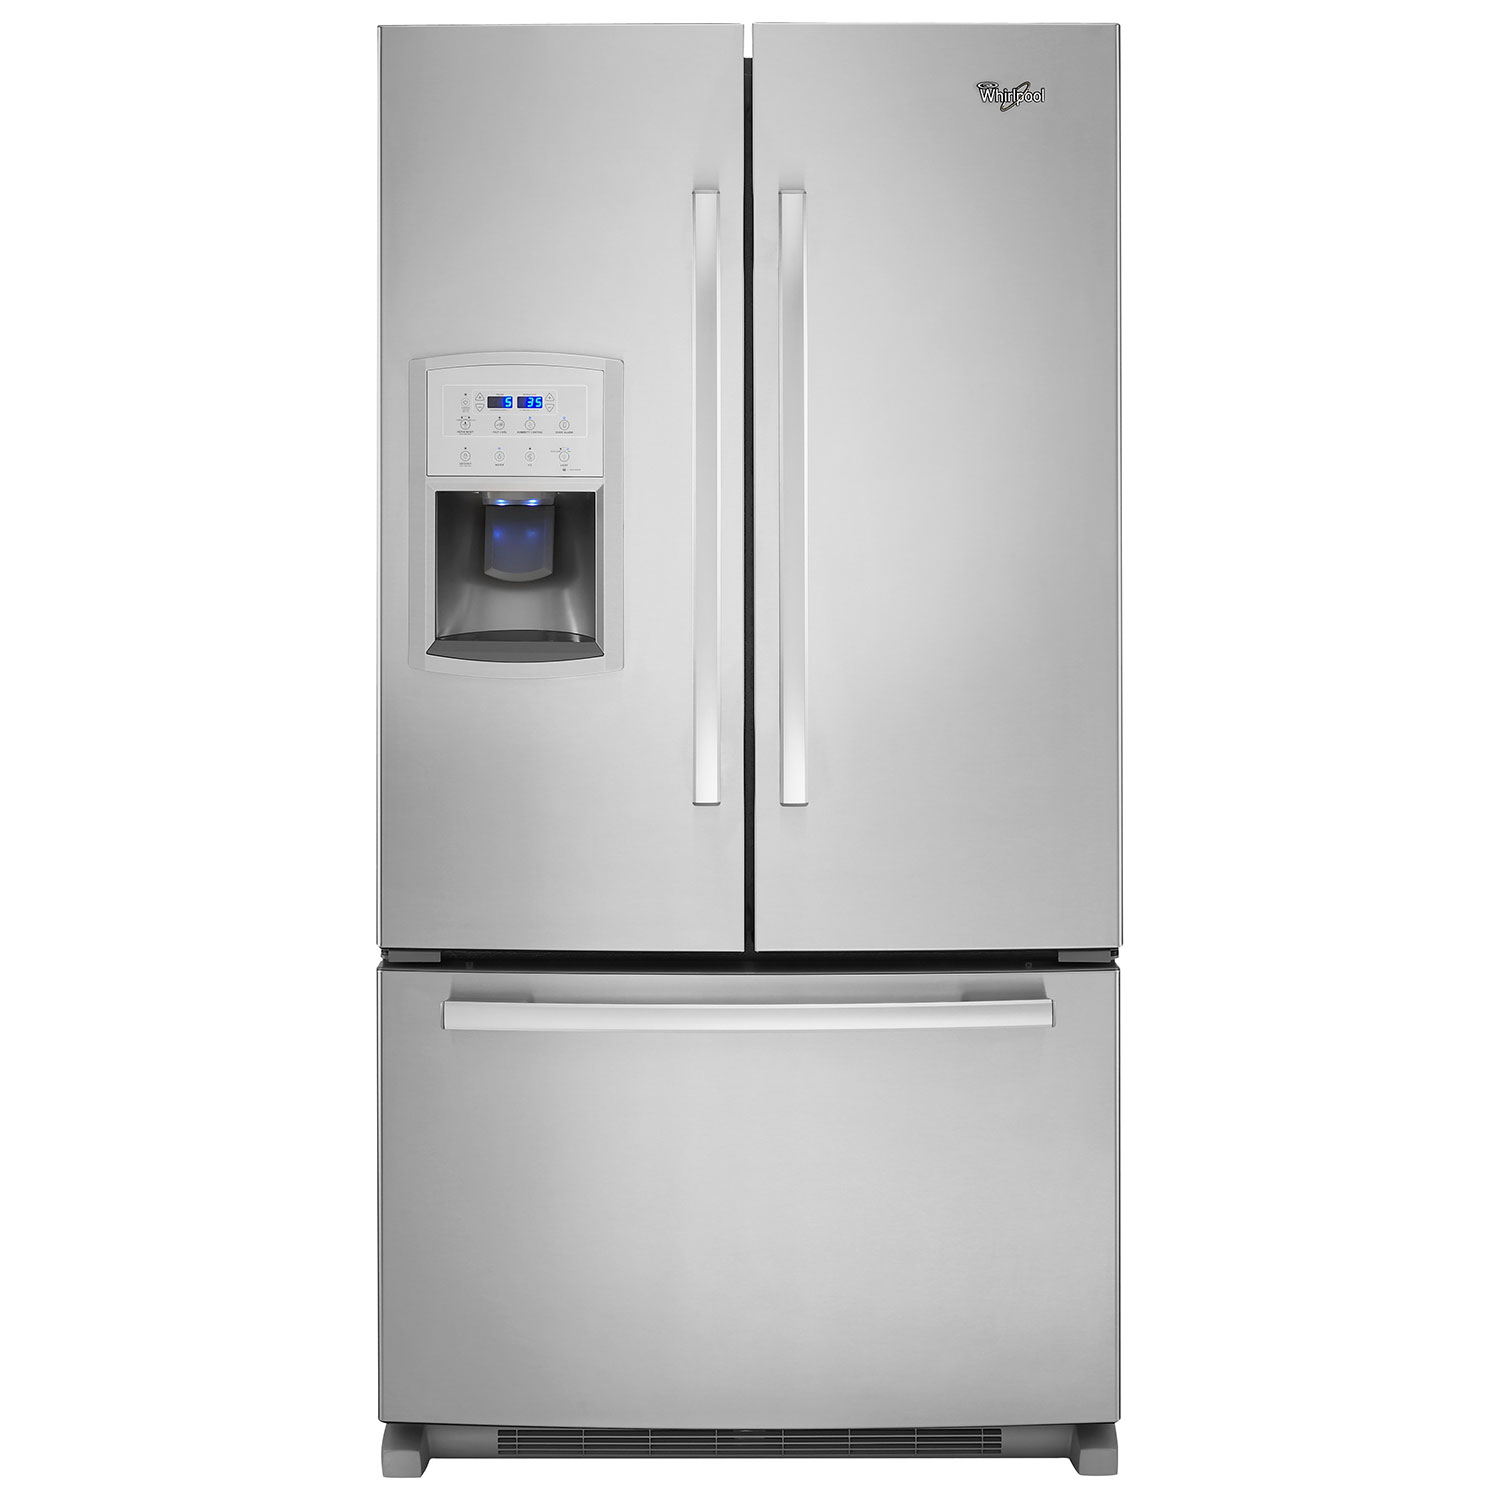 Whirlpool 36" Counter Depth French Door Refrigerator w/ Ice & Water Dispenser (WRF550CDHZ)-Stainless